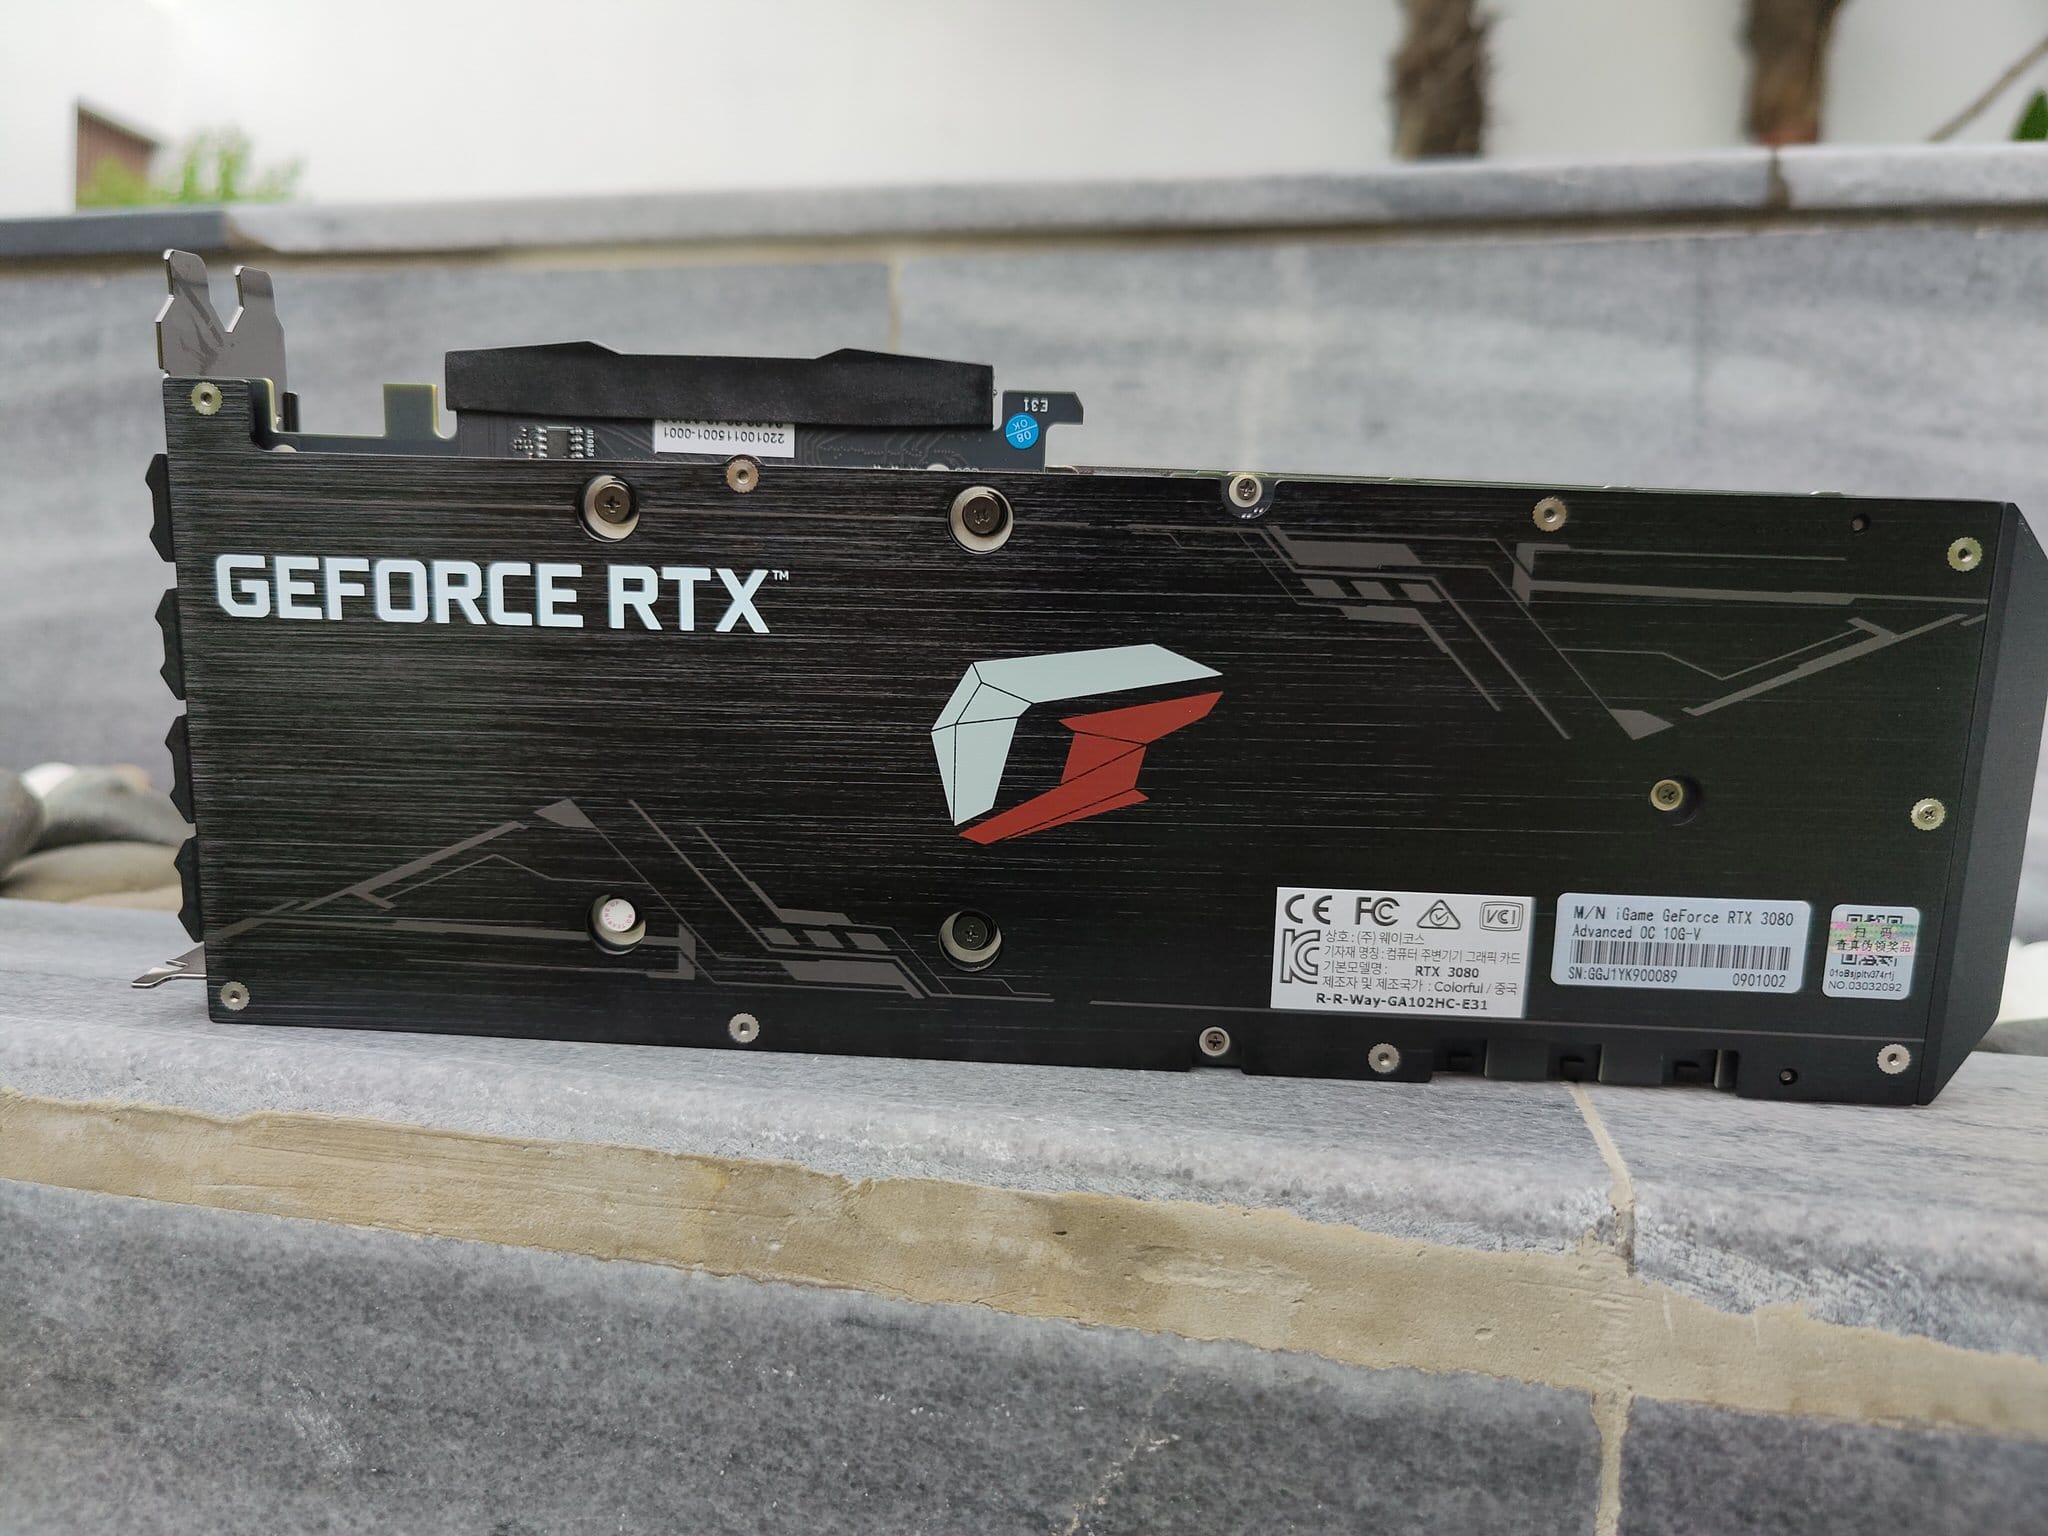 Mở hộp Colorful GeForce RTX 3080 Advanced 10GB